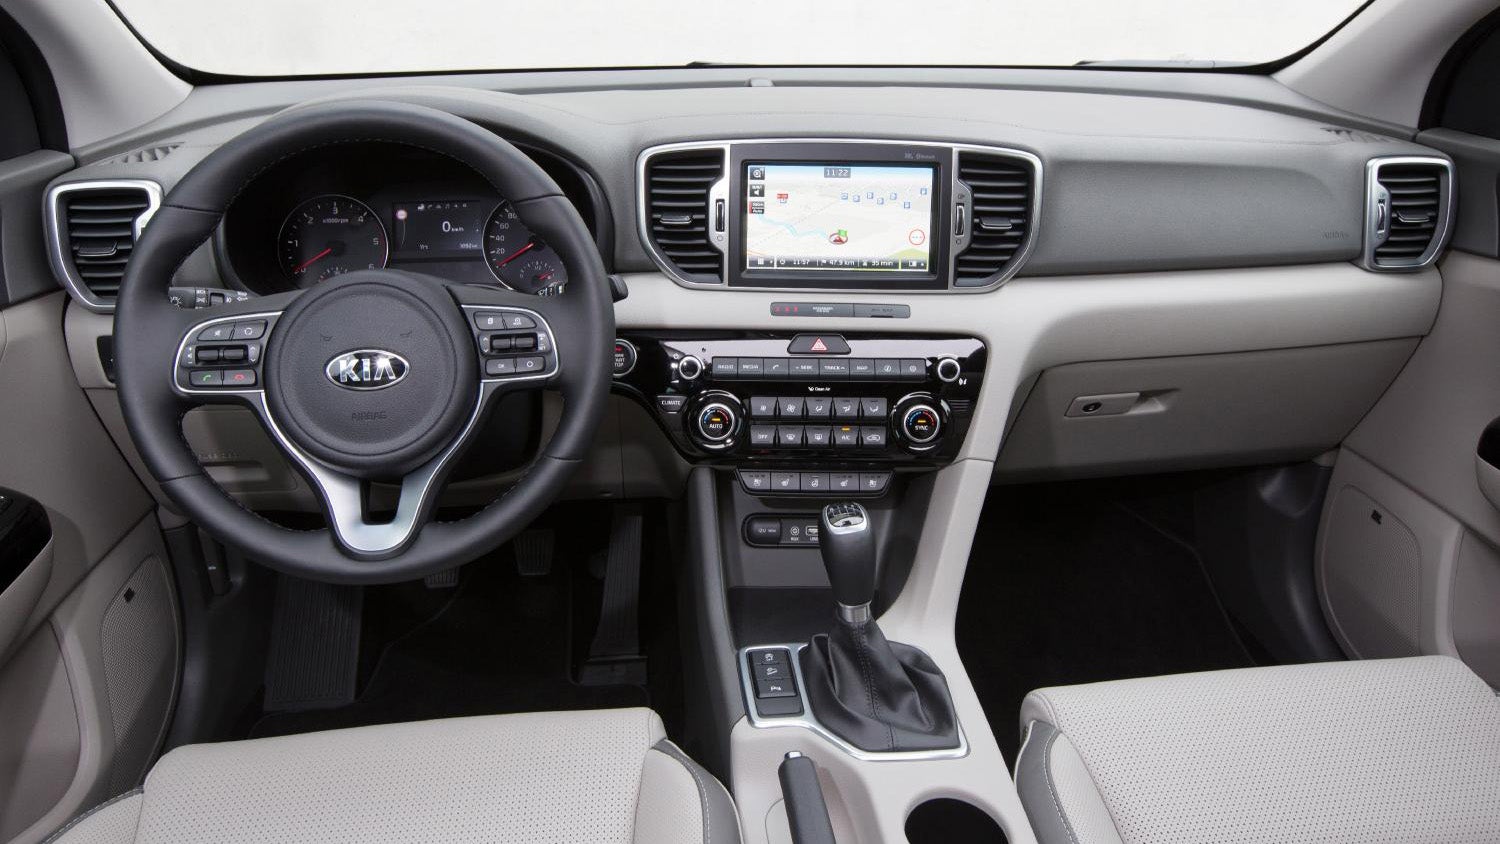 Interior view of Kia Sportage dashboard and steering wheel